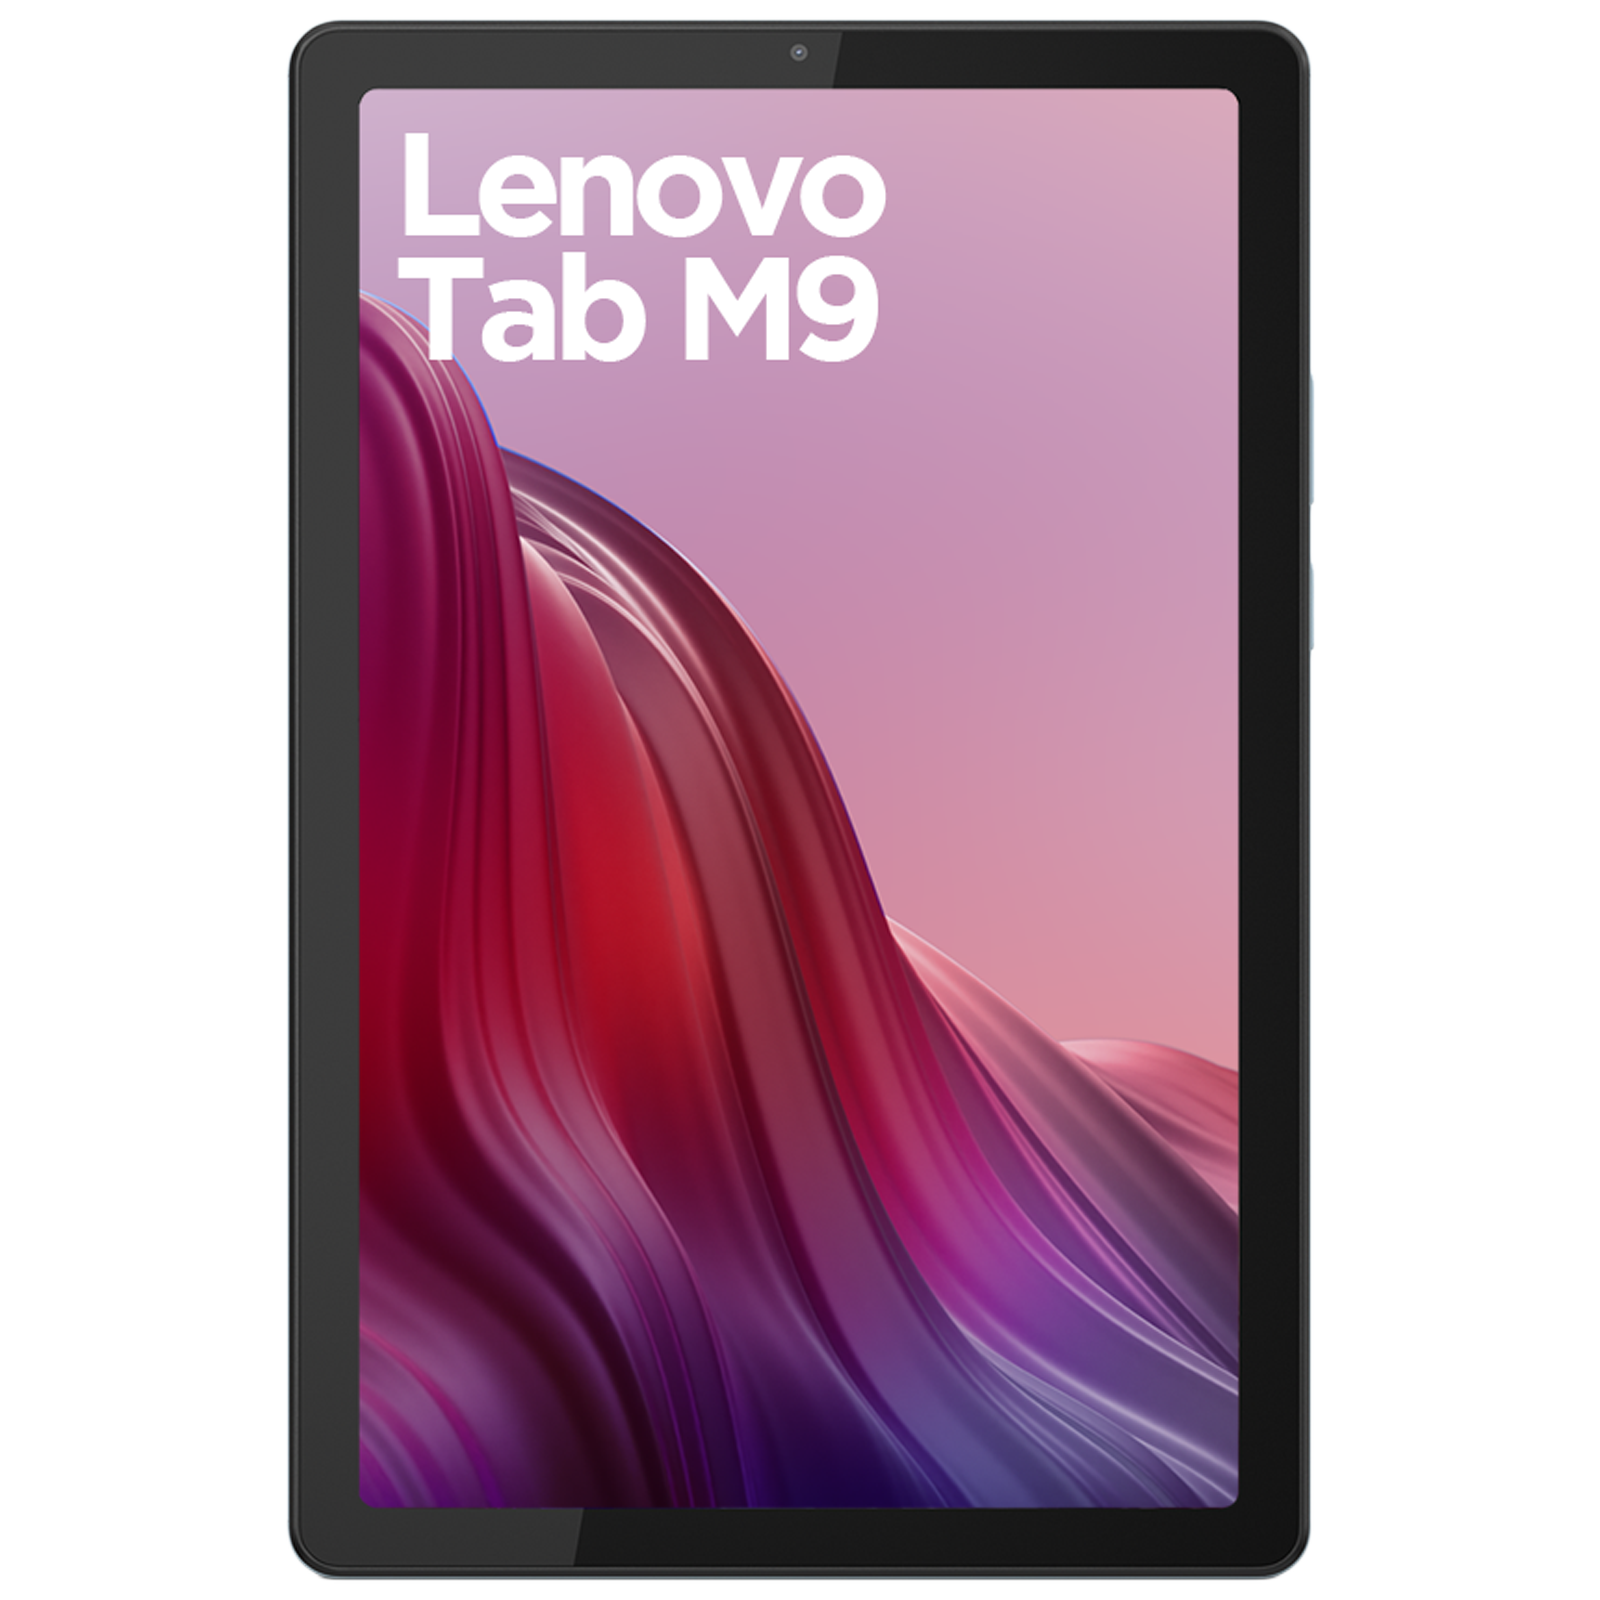 Lenovo Tab M9 Wi-Fi+4G LTE Android Tablet (9 Inch, 4GB RAM, 64GB ROM, Arctic Grey)